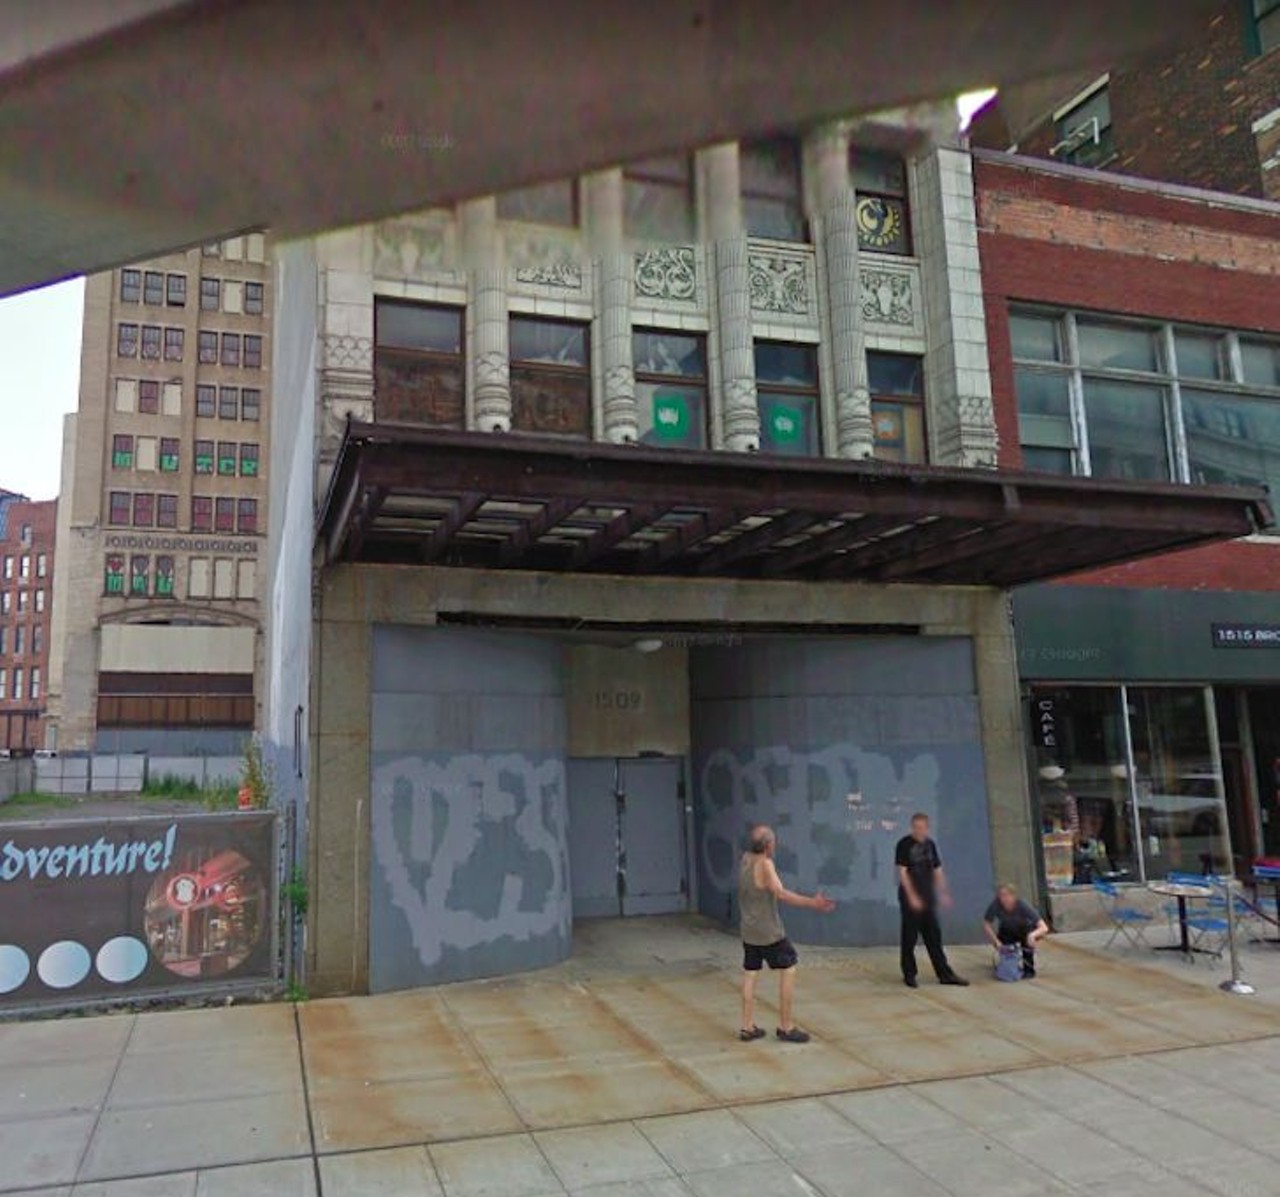 Then &#150; June 2009
The vacant Wurlitzer building
1509 Broadway Ave., Detroit, MI
&copy;2018 Google